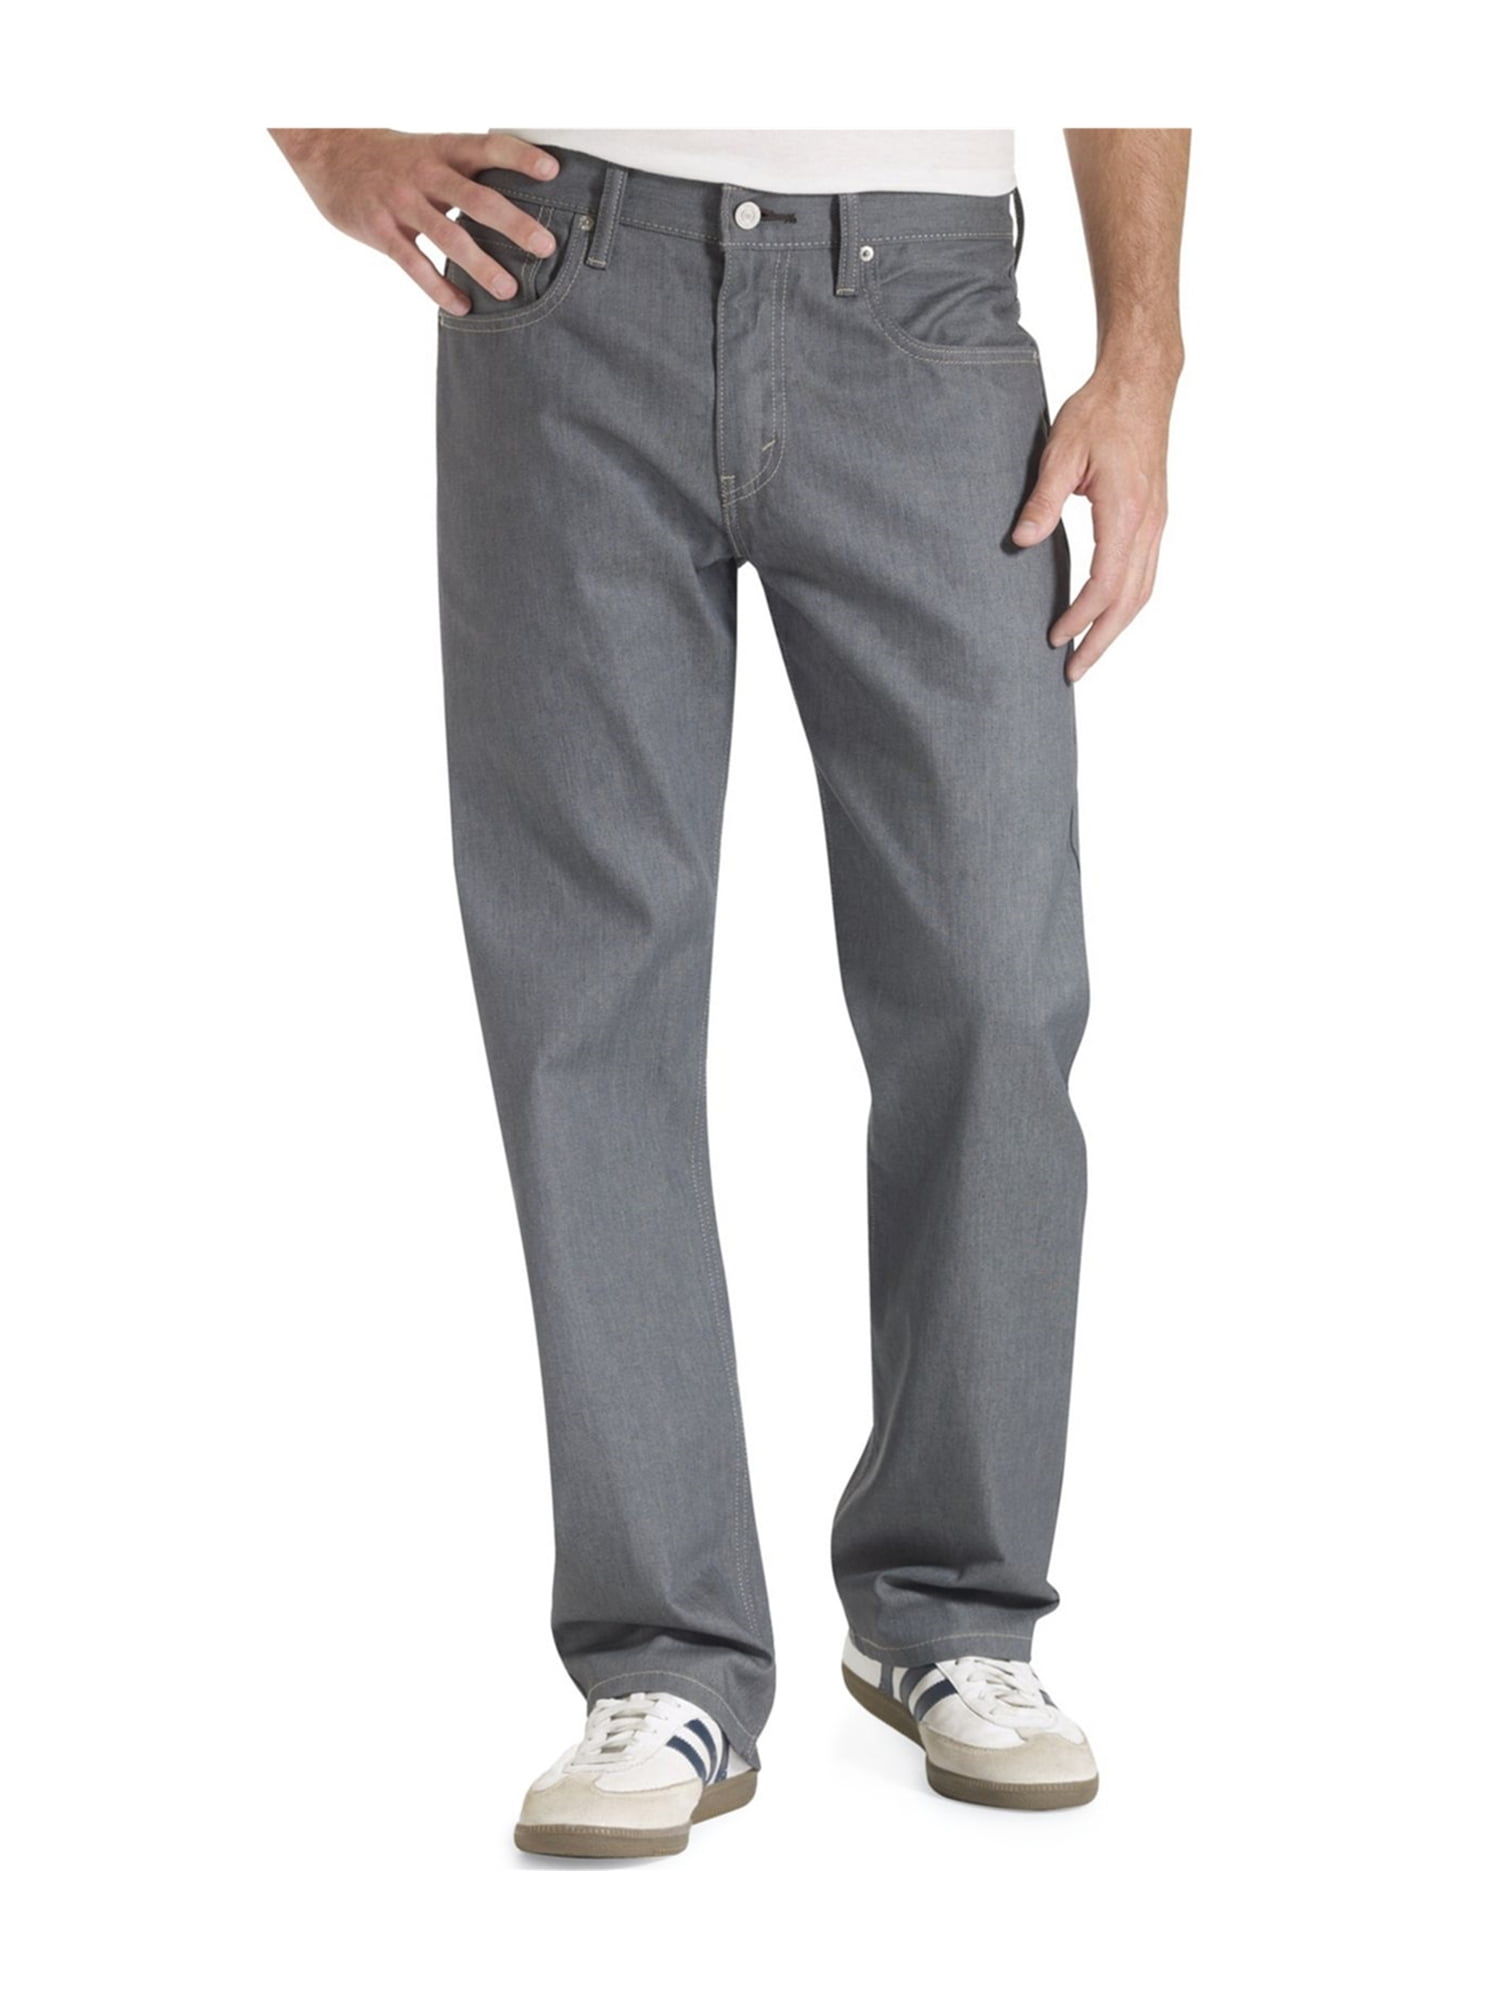 Levi's Mens 569 Loose Straight Leg Jeans grey 32x34 | Walmart Canada